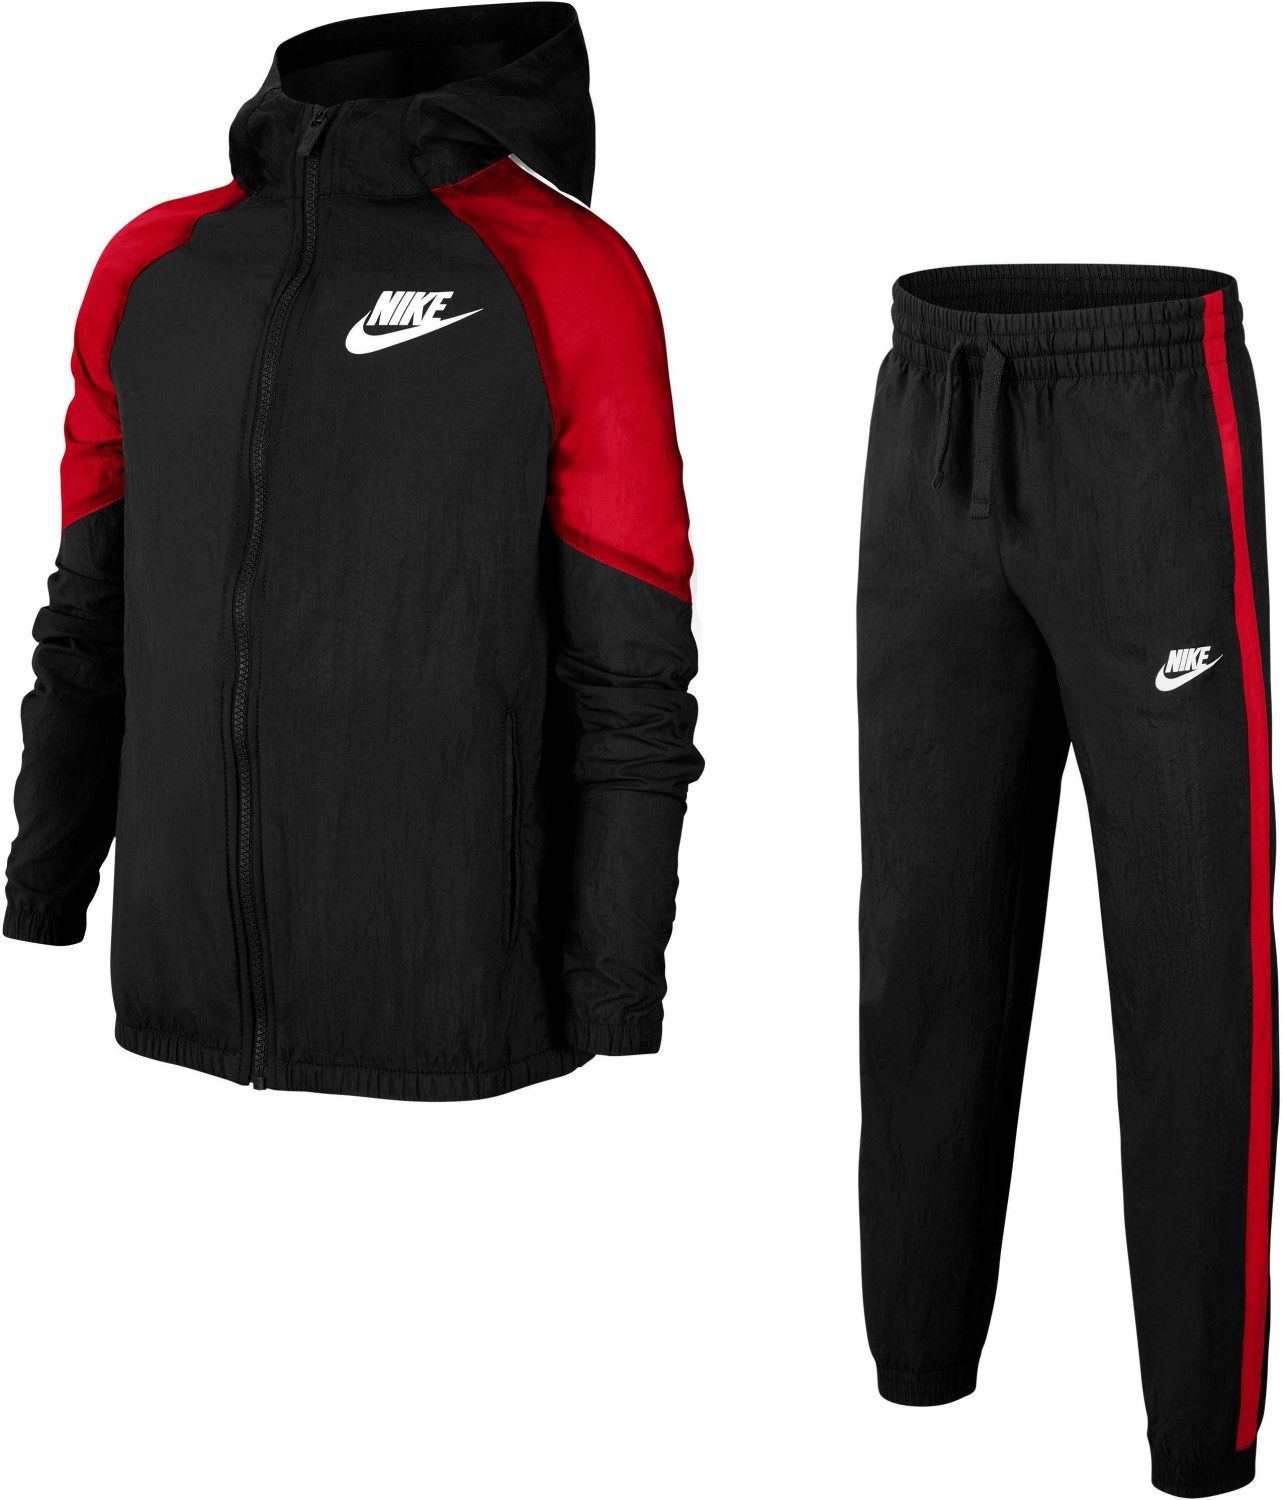 Nike Youth Tracksuit black/university red/white/white (BV3700)